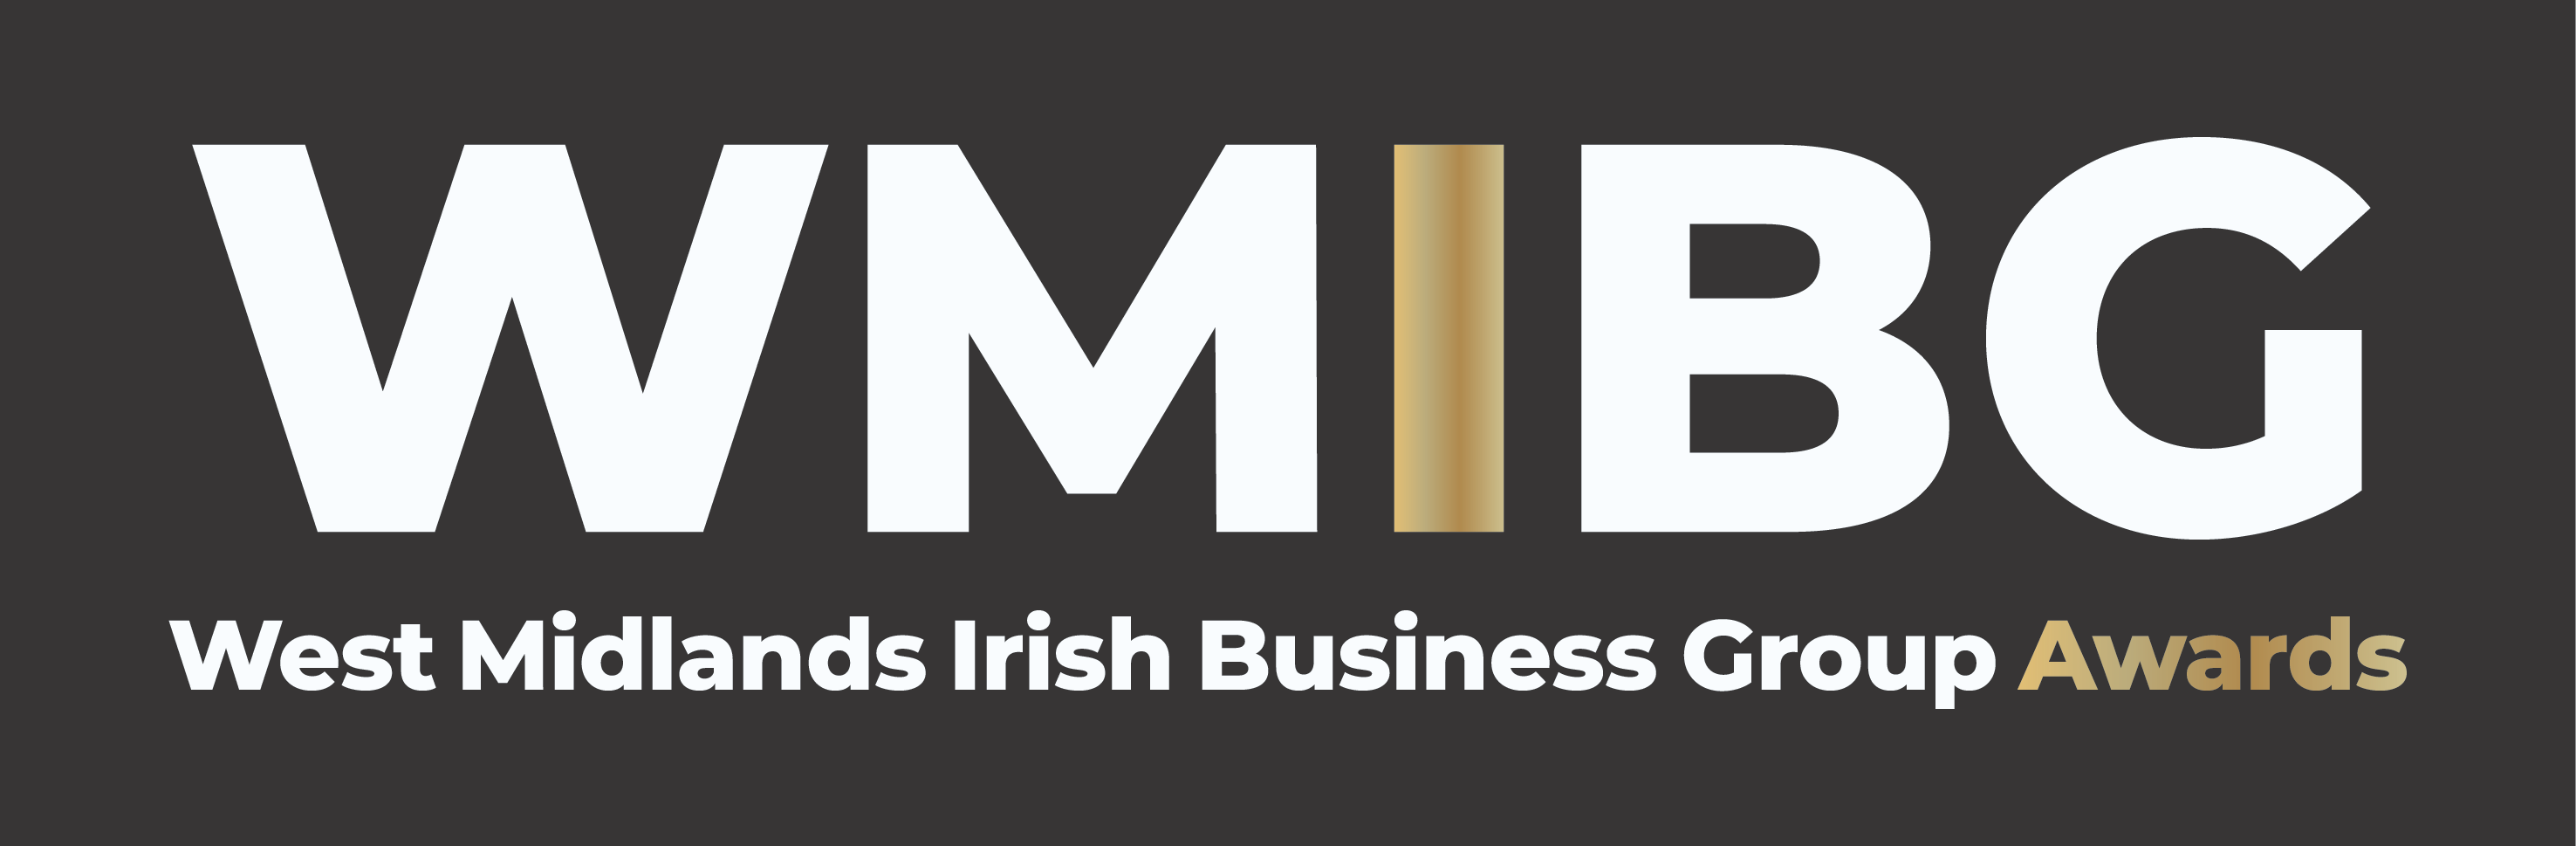 The West Midlands Irish Business Group Awards